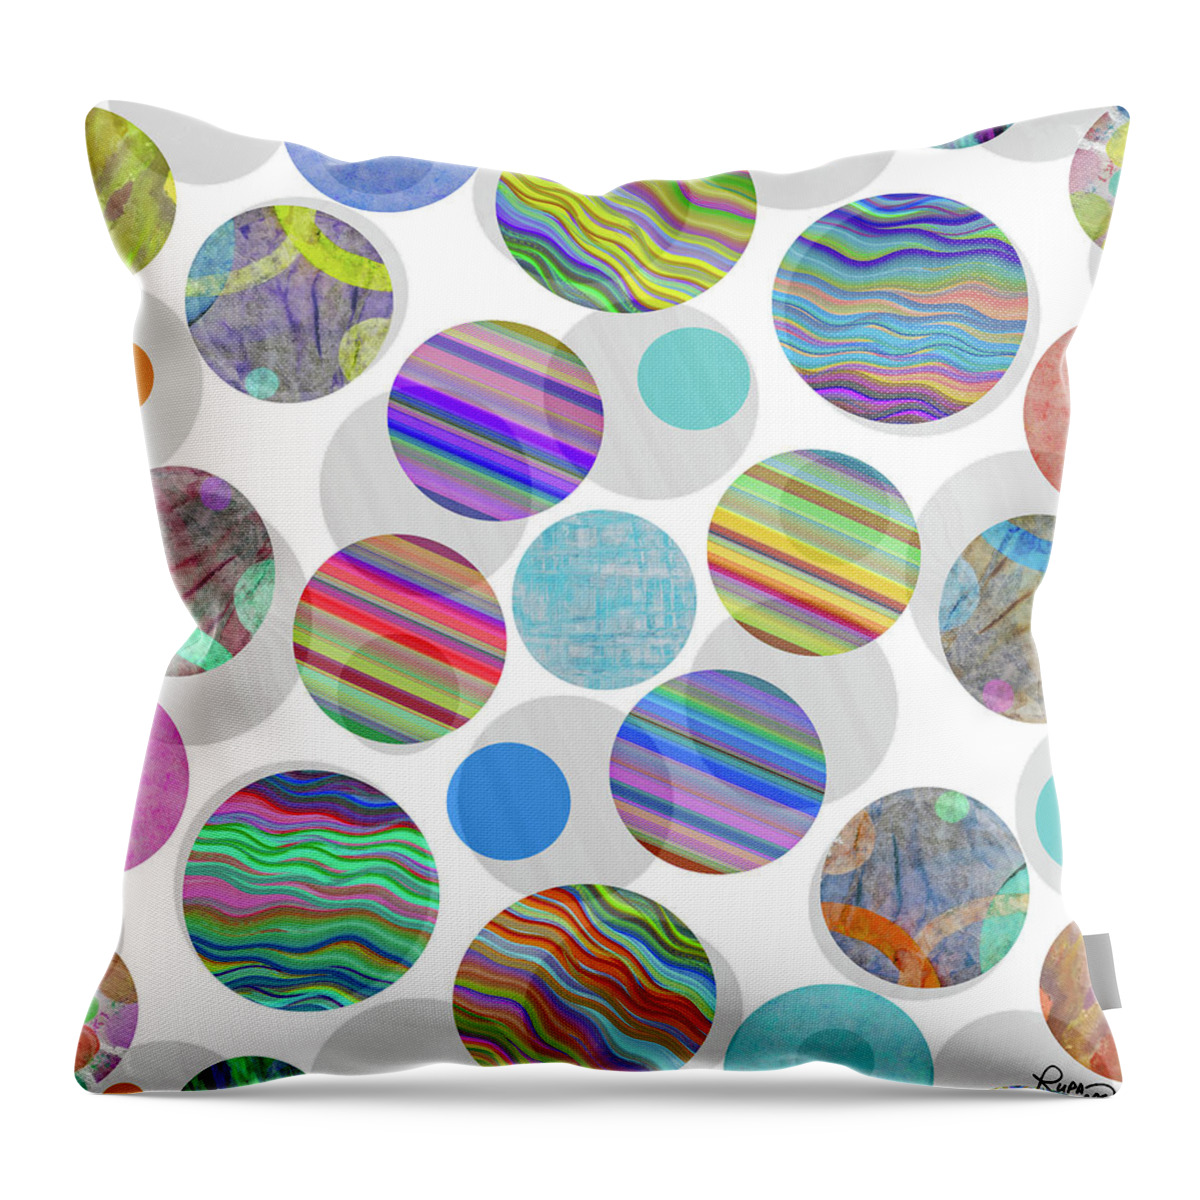 Abstract Throw Pillow featuring the digital art Ball Toss by Ruth Palmer